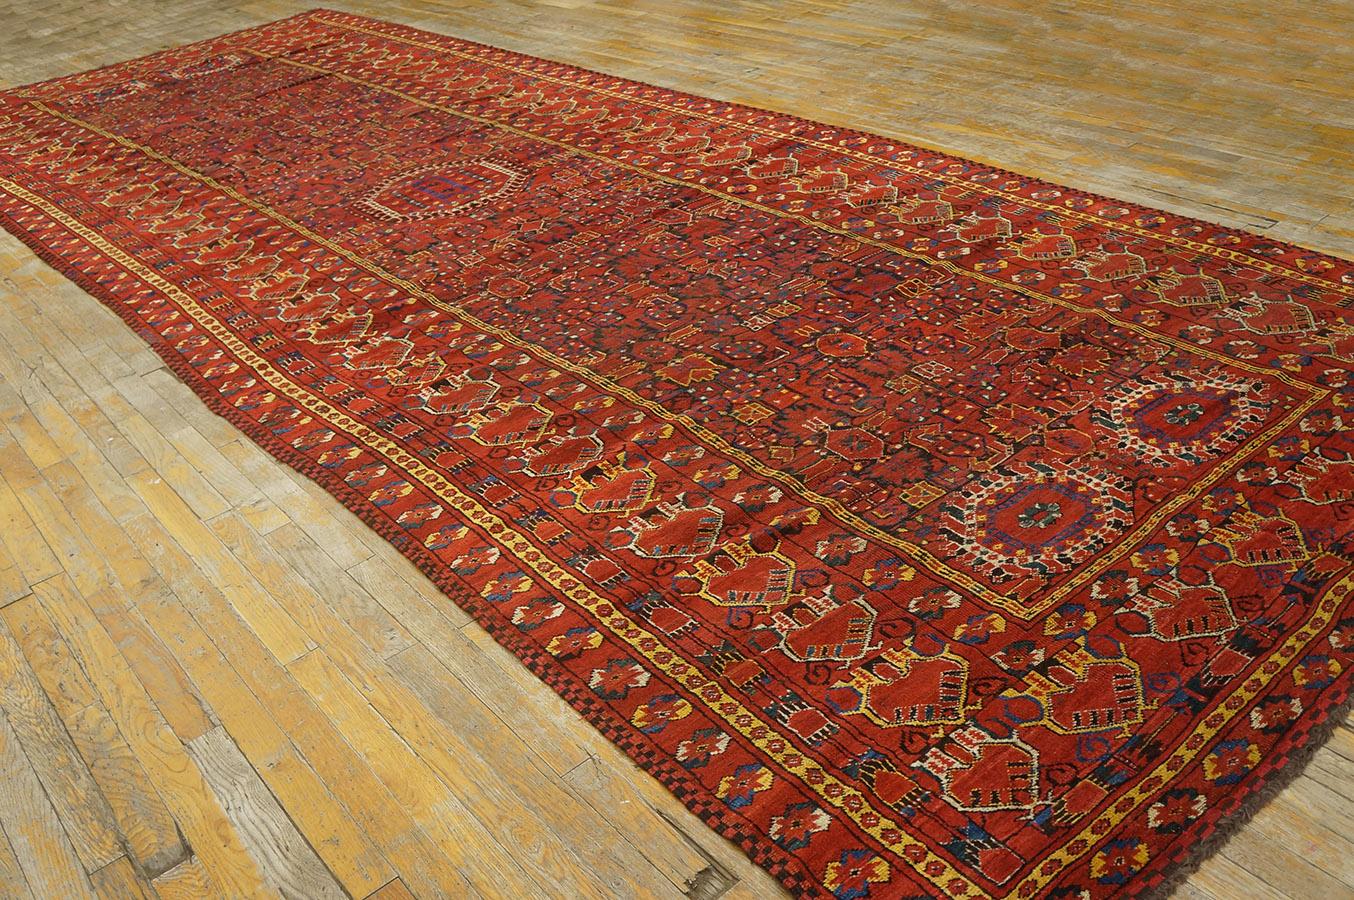 19th Century Central Asian Ersari-Beshir Gallery Carpet ( 6'6